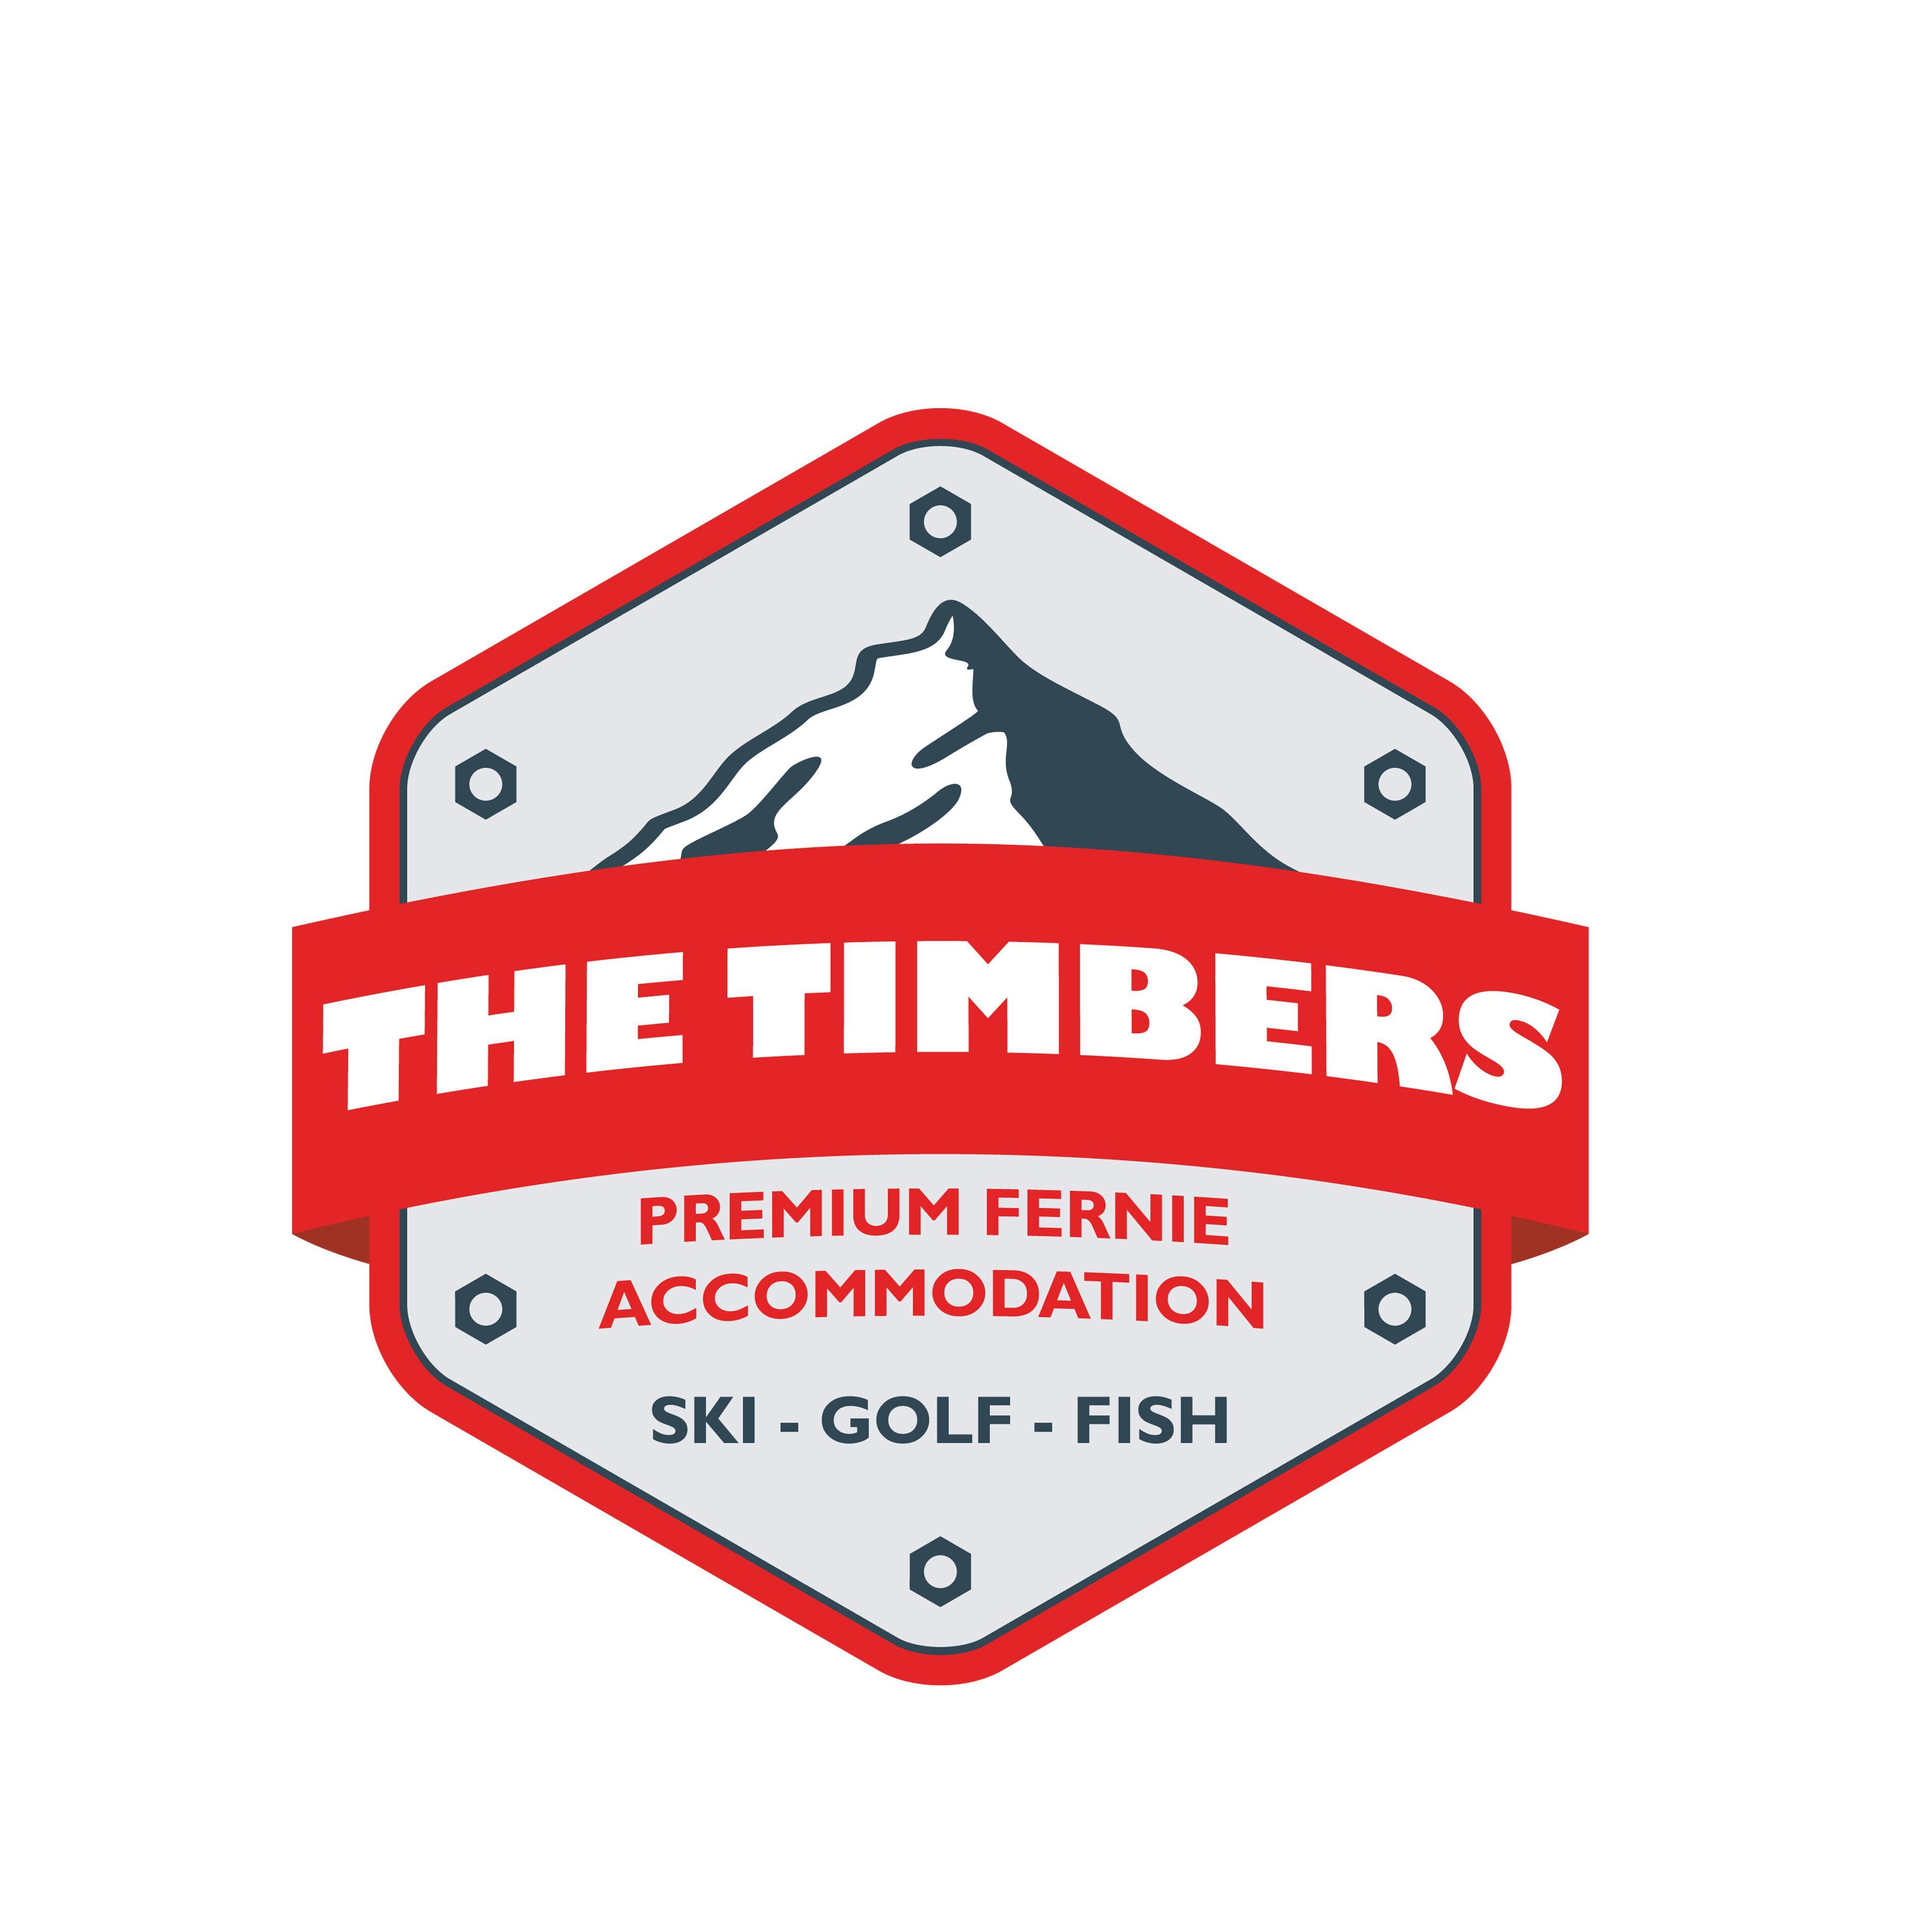 Fernie Logo - The Timbers Lodge